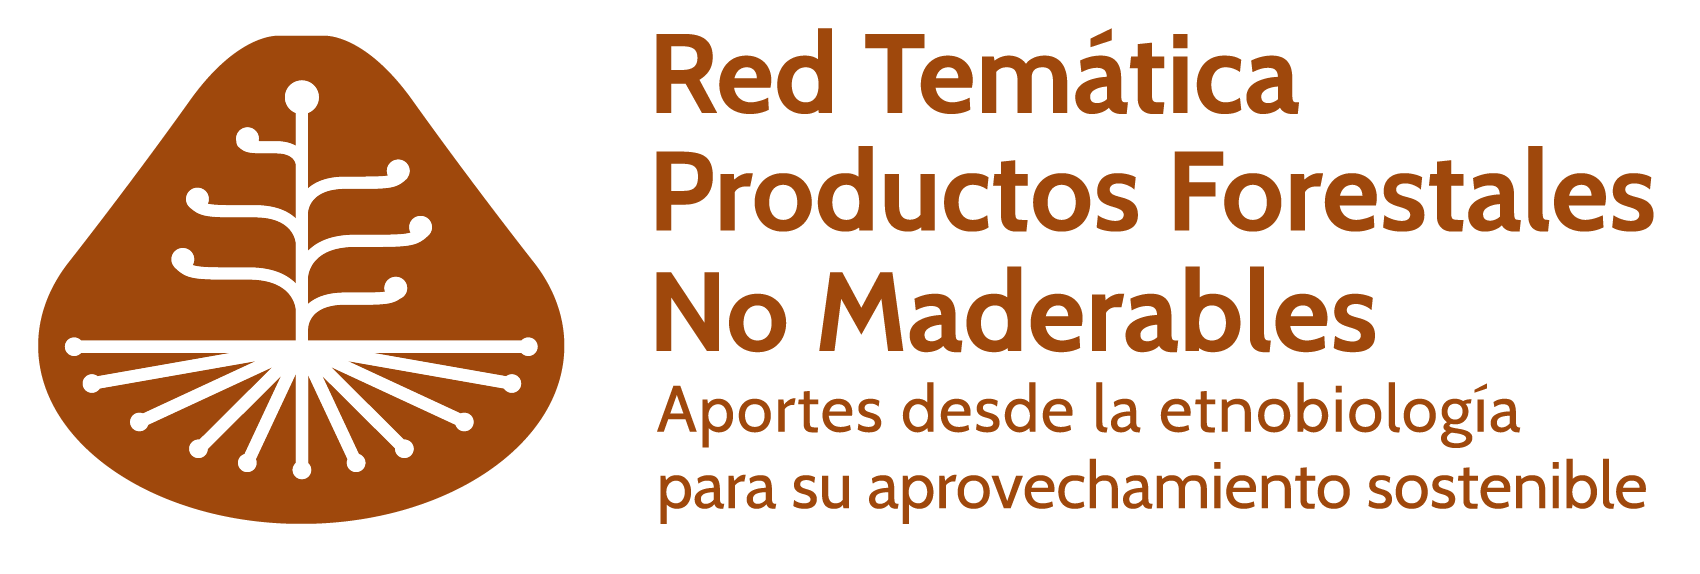 Red Tématica de Productos Forestales no Maderables